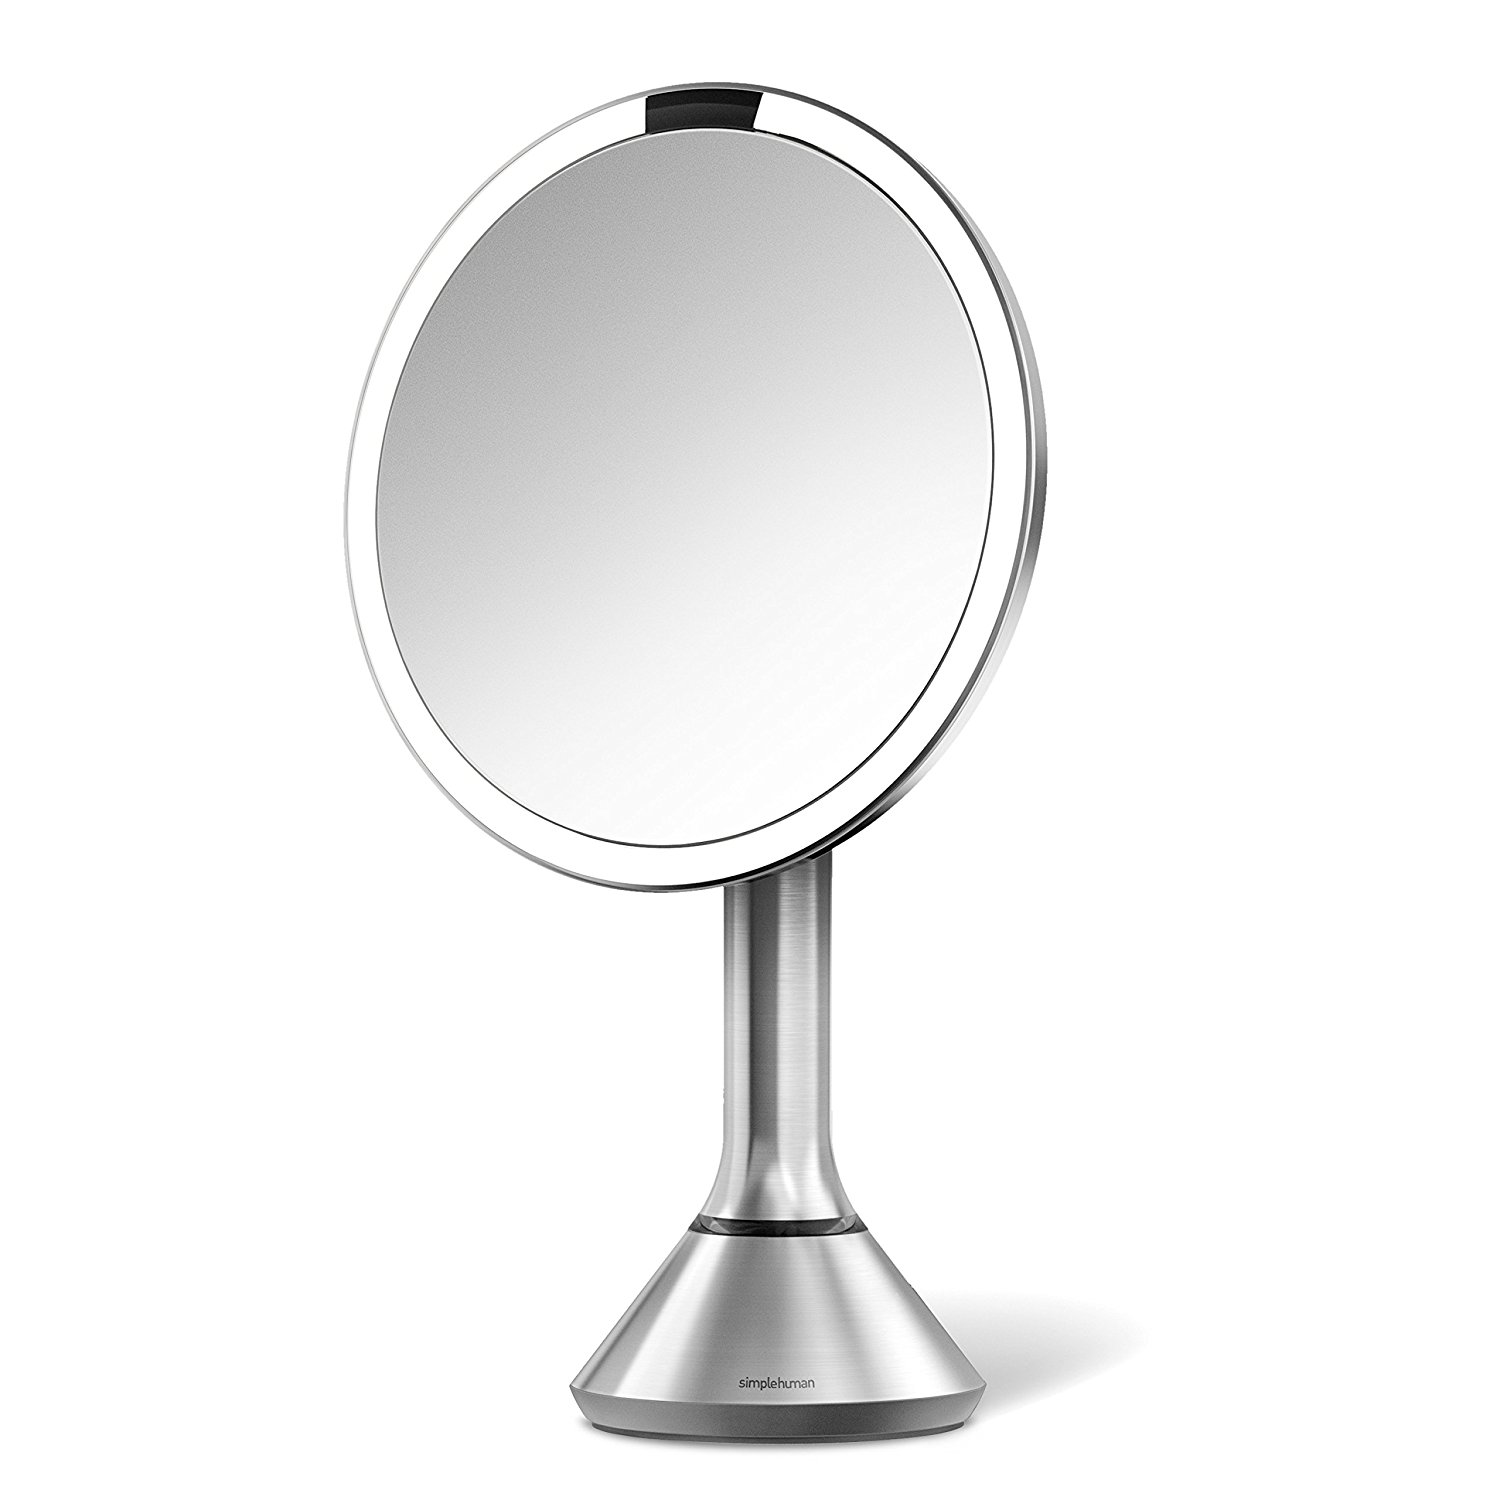 simplehuman 8 Inch Sensor Mirror, Lighted Makeup Vanity Mirror, 5x Magnification